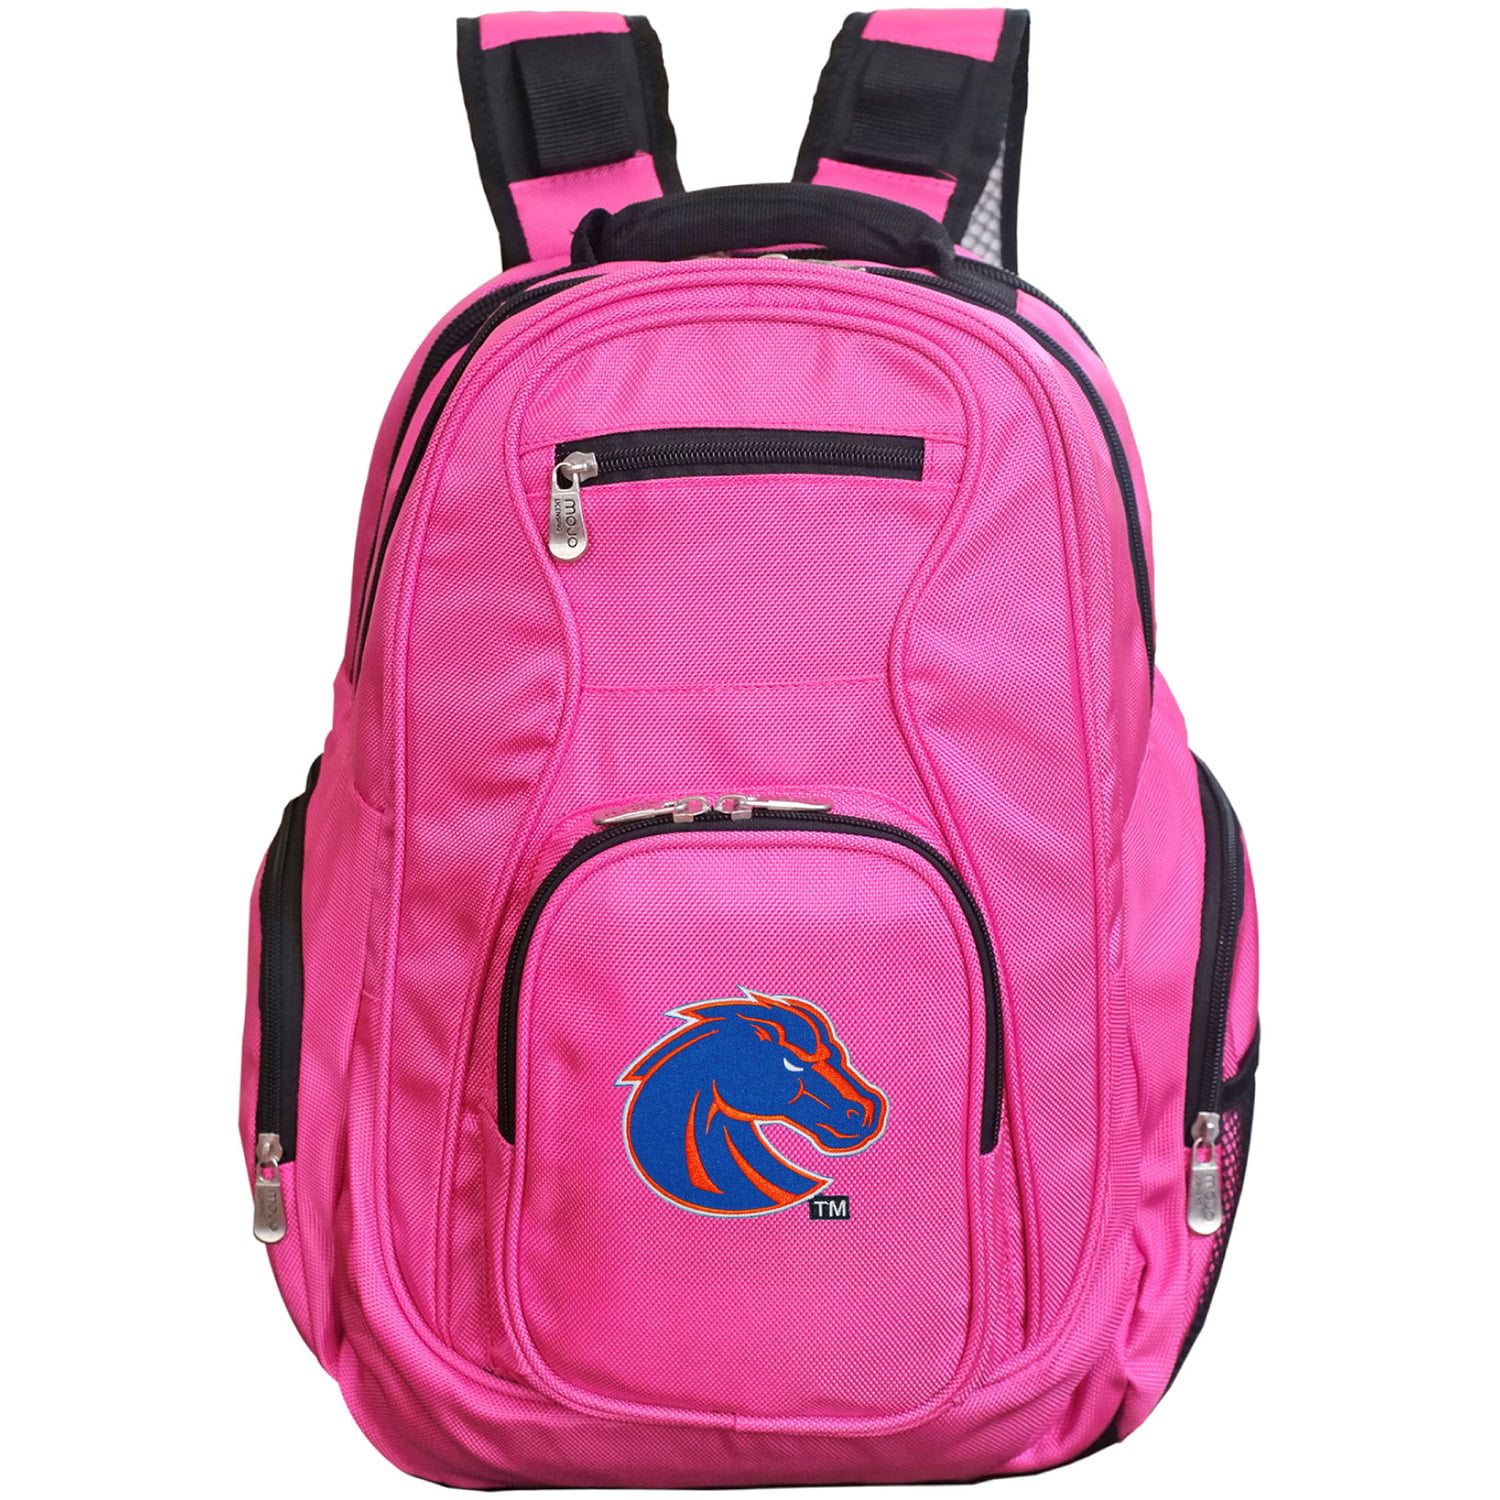 Boise State University Travel Bag or Small Crossbody Day Pack Shoulder Bag 